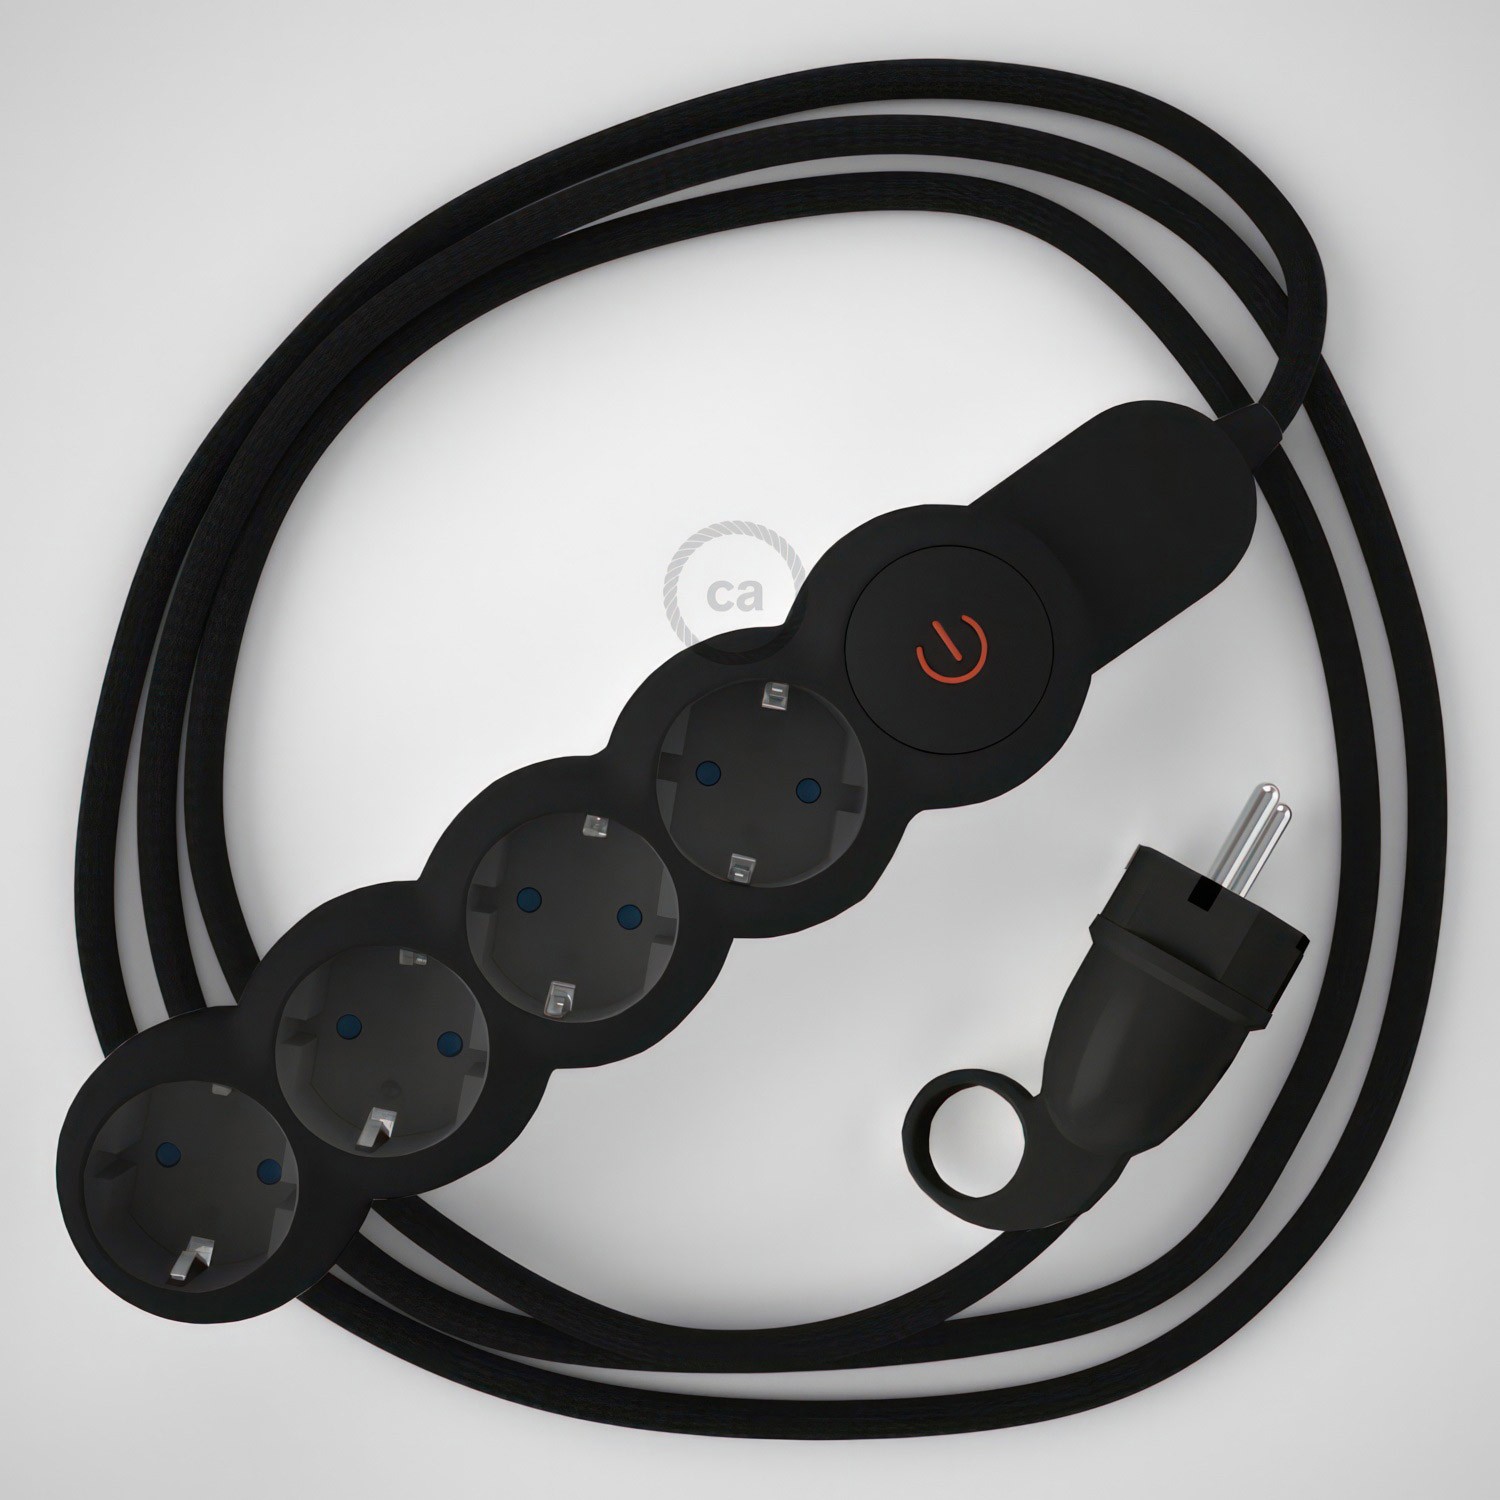 Razdjelnik s električnim kabelom, presvučen crnim RM04 tekstilom i s udobnim šuko utikačem